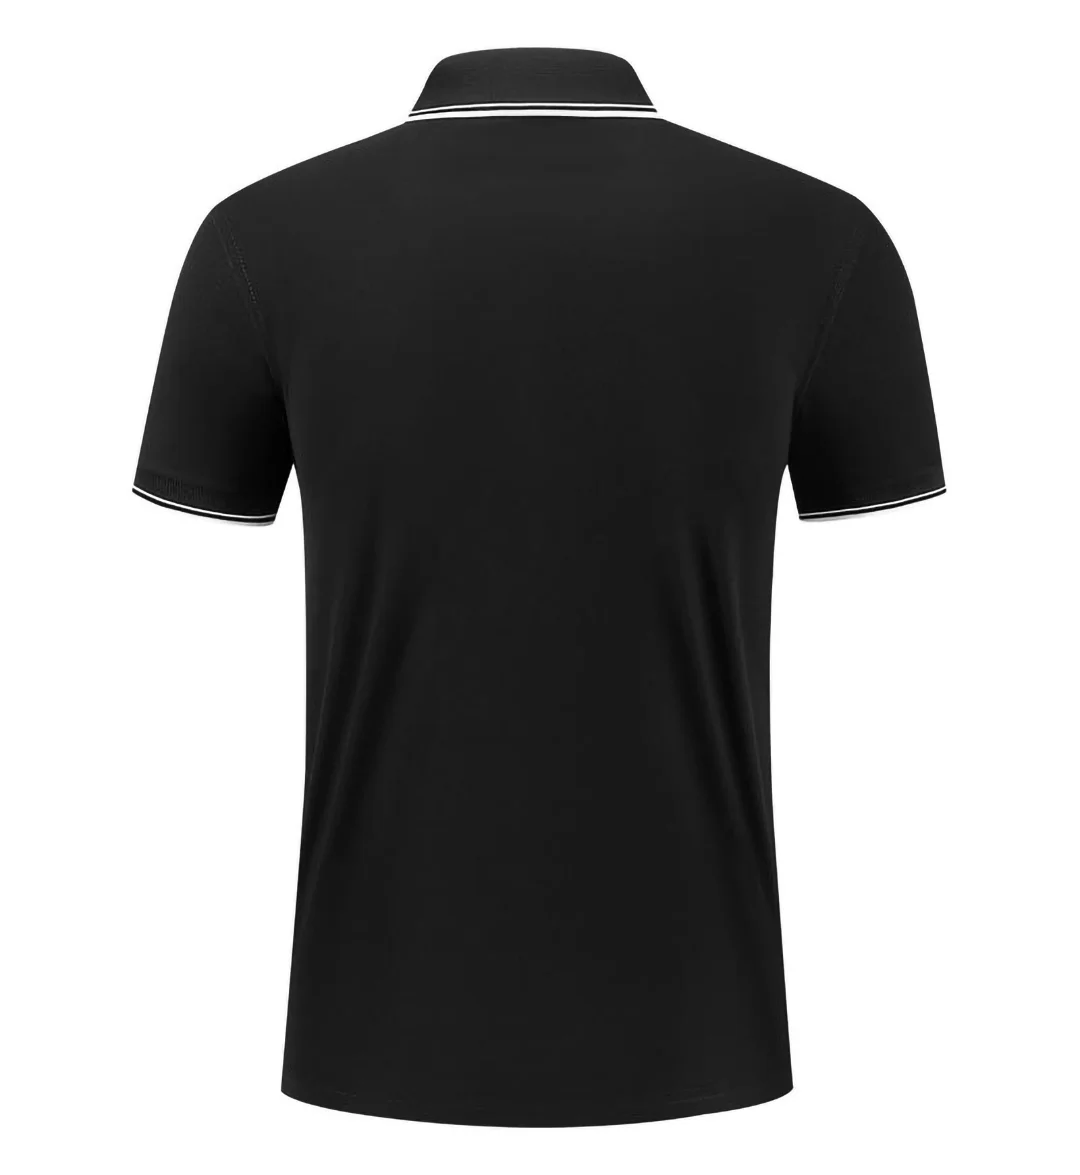 Men's contrasting sideline polo shirt